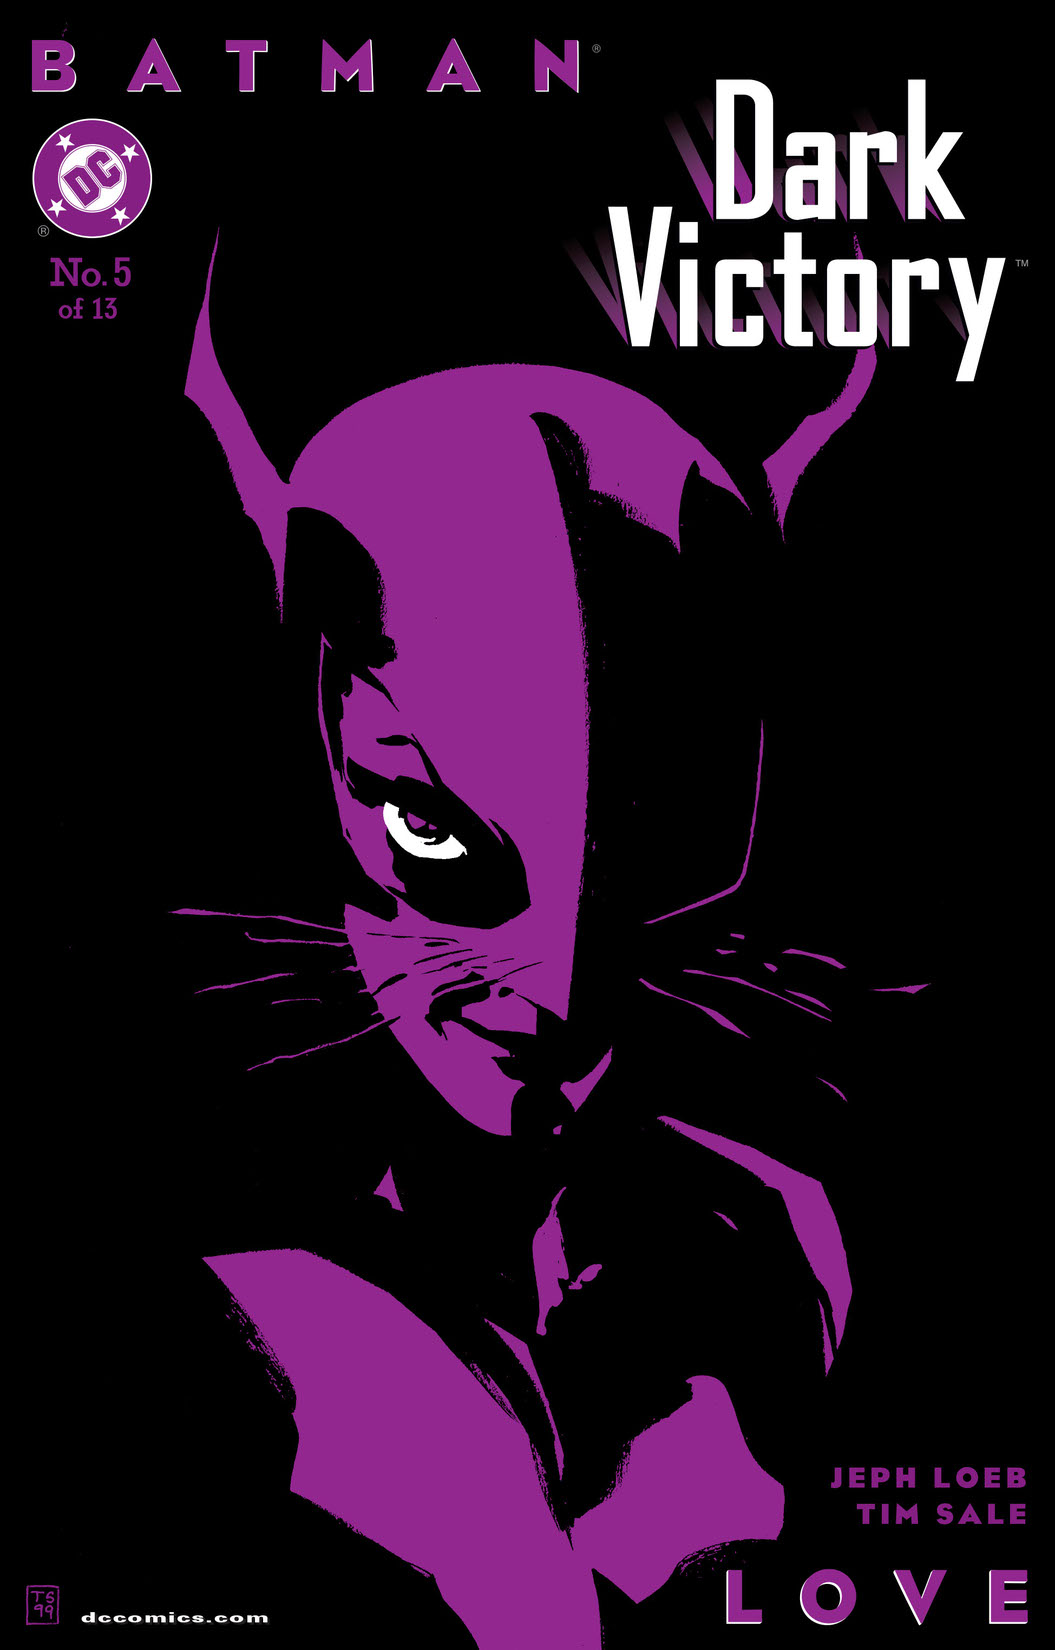 Batman: Dark Victory #5 preview images